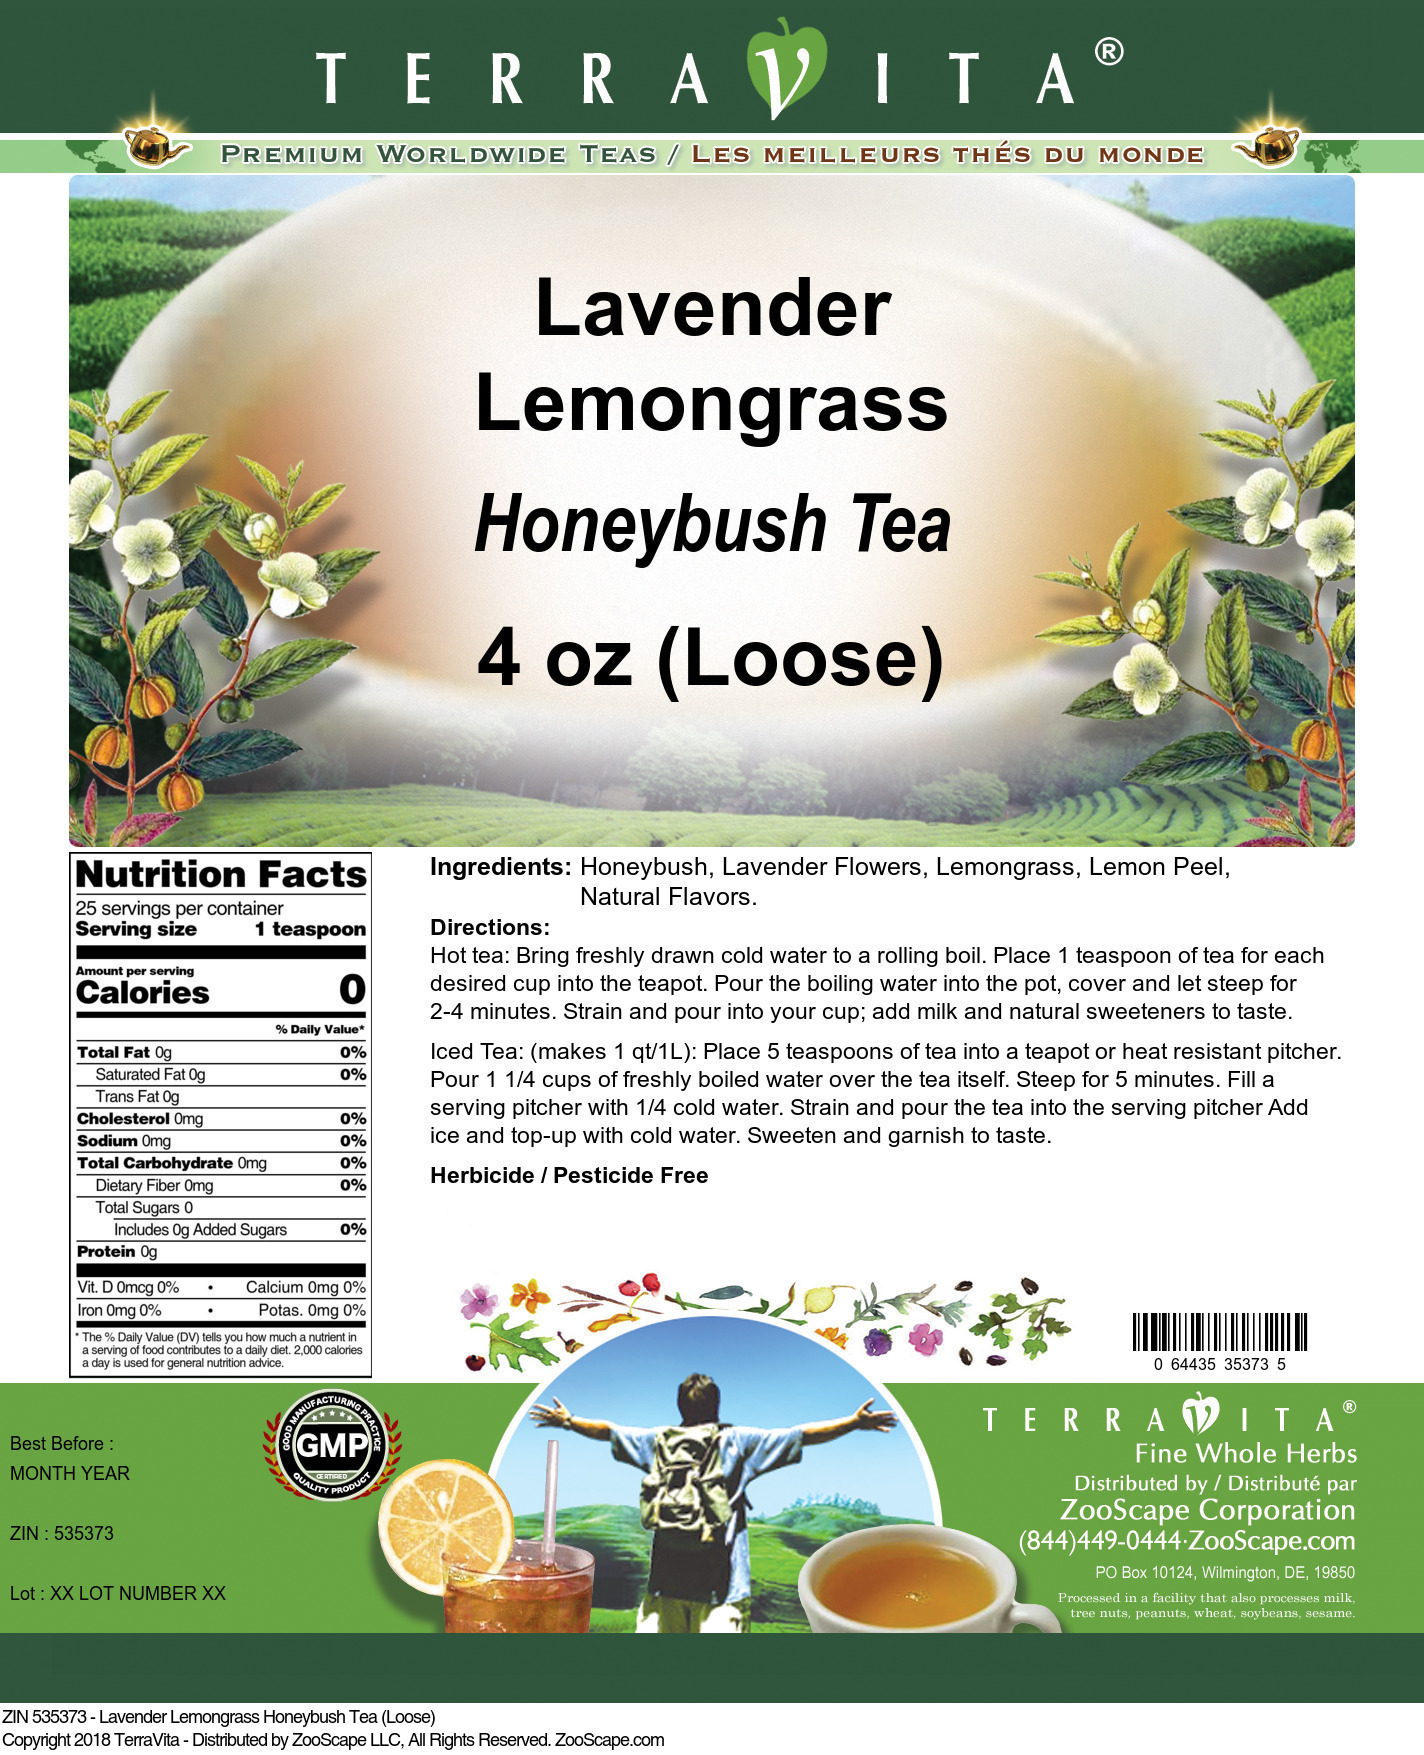 Lavender Lemongrass Honeybush Tea (Loose) - Label